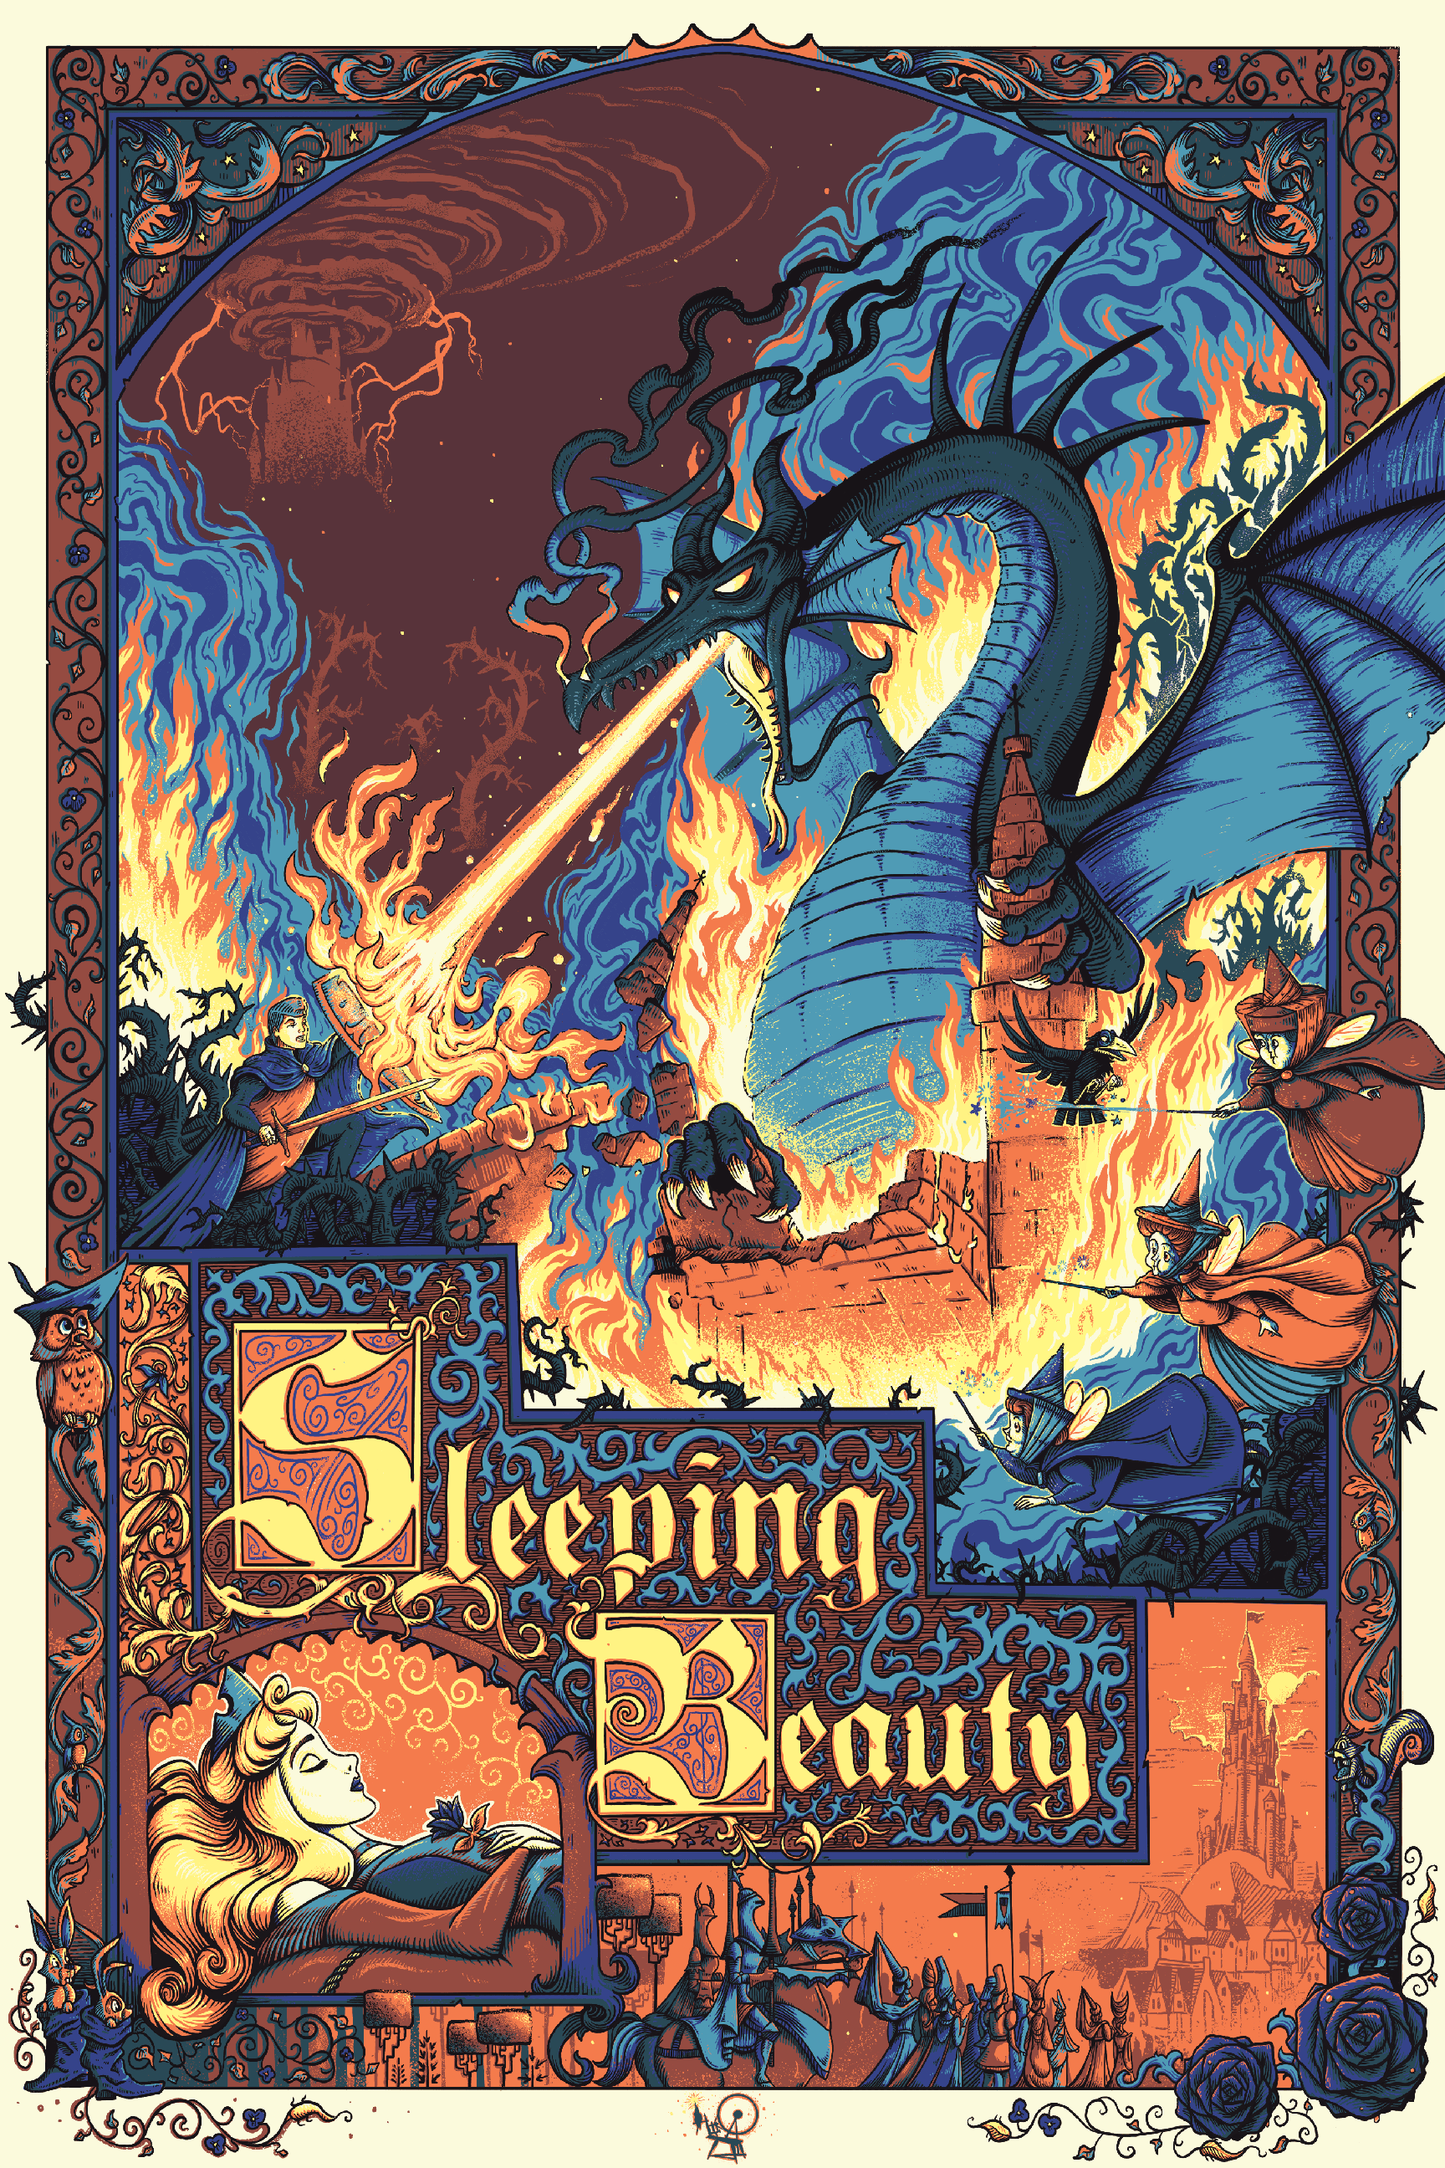 Alex Hovey "Sleeping Beauty" Variant - Acrylic Panel Print